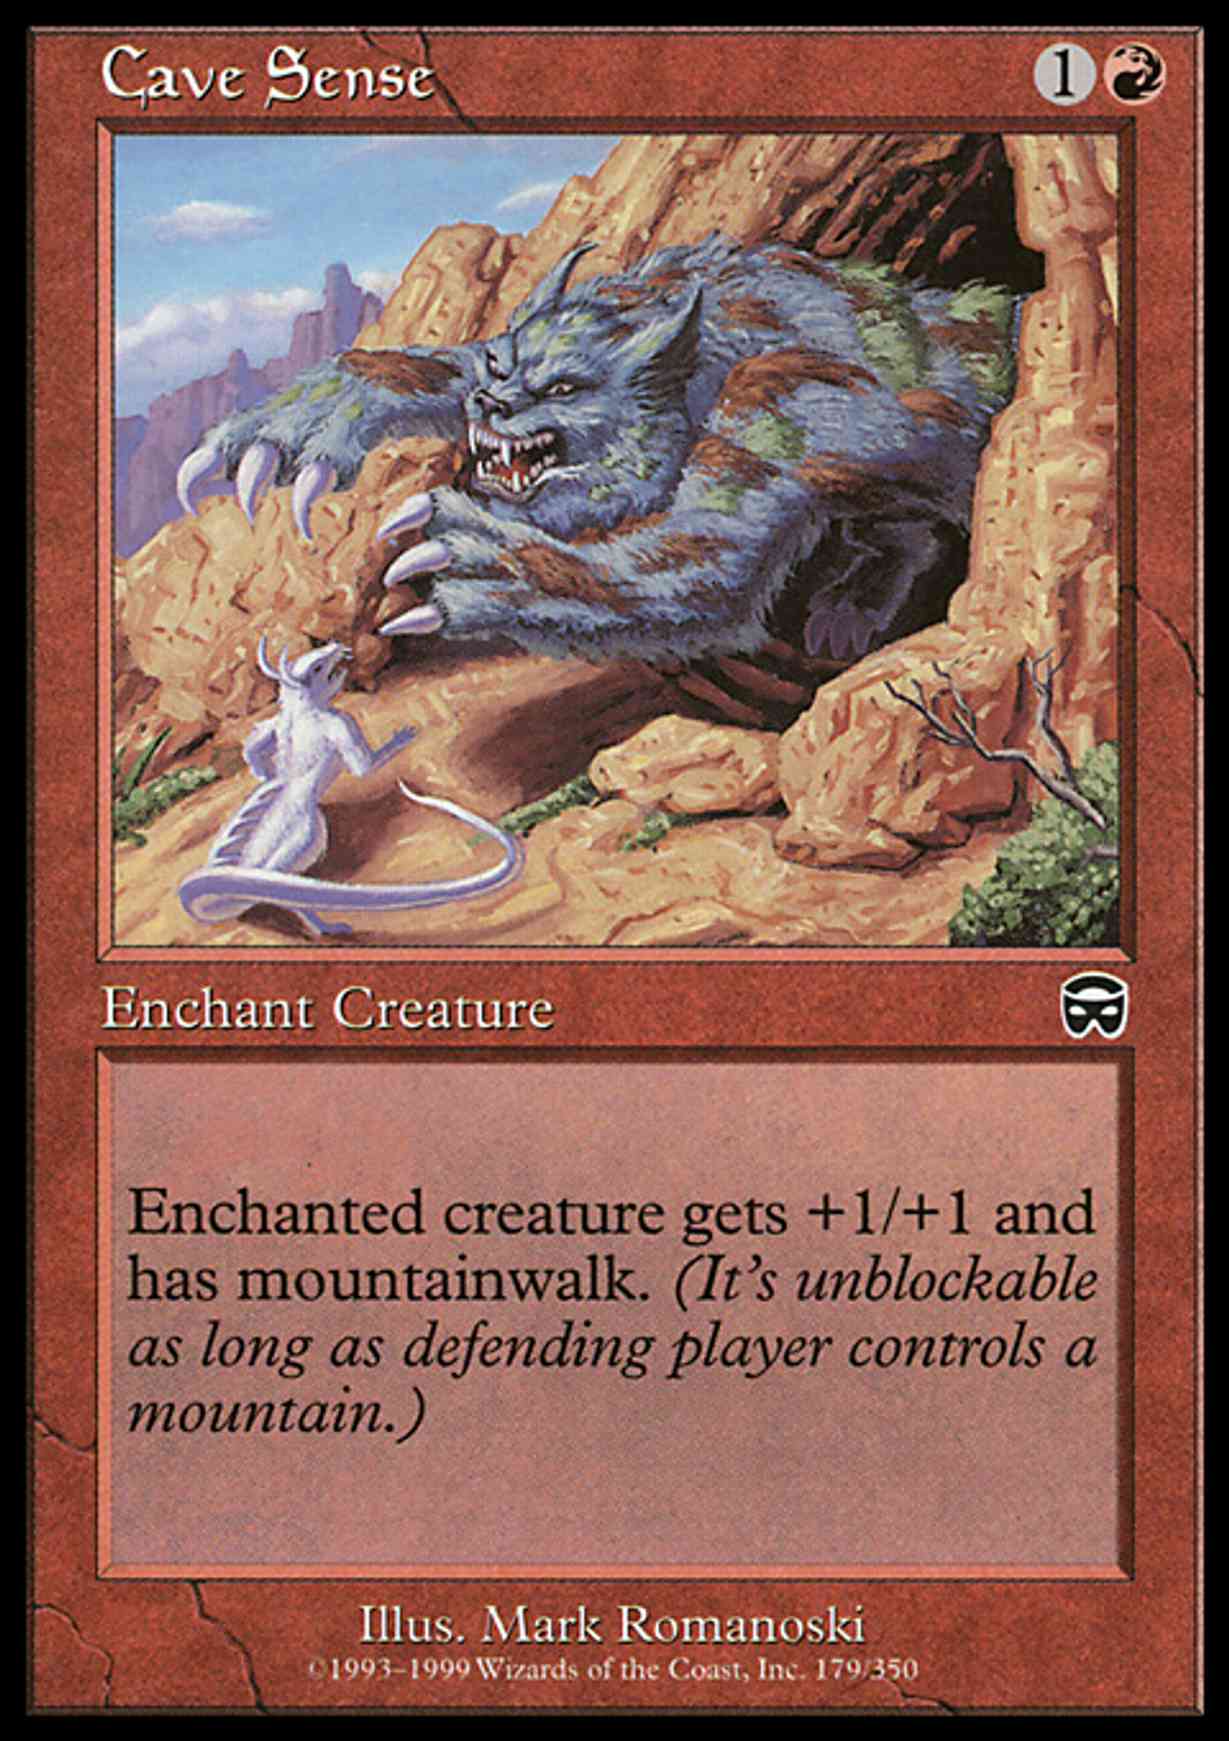 Cave Sense magic card front